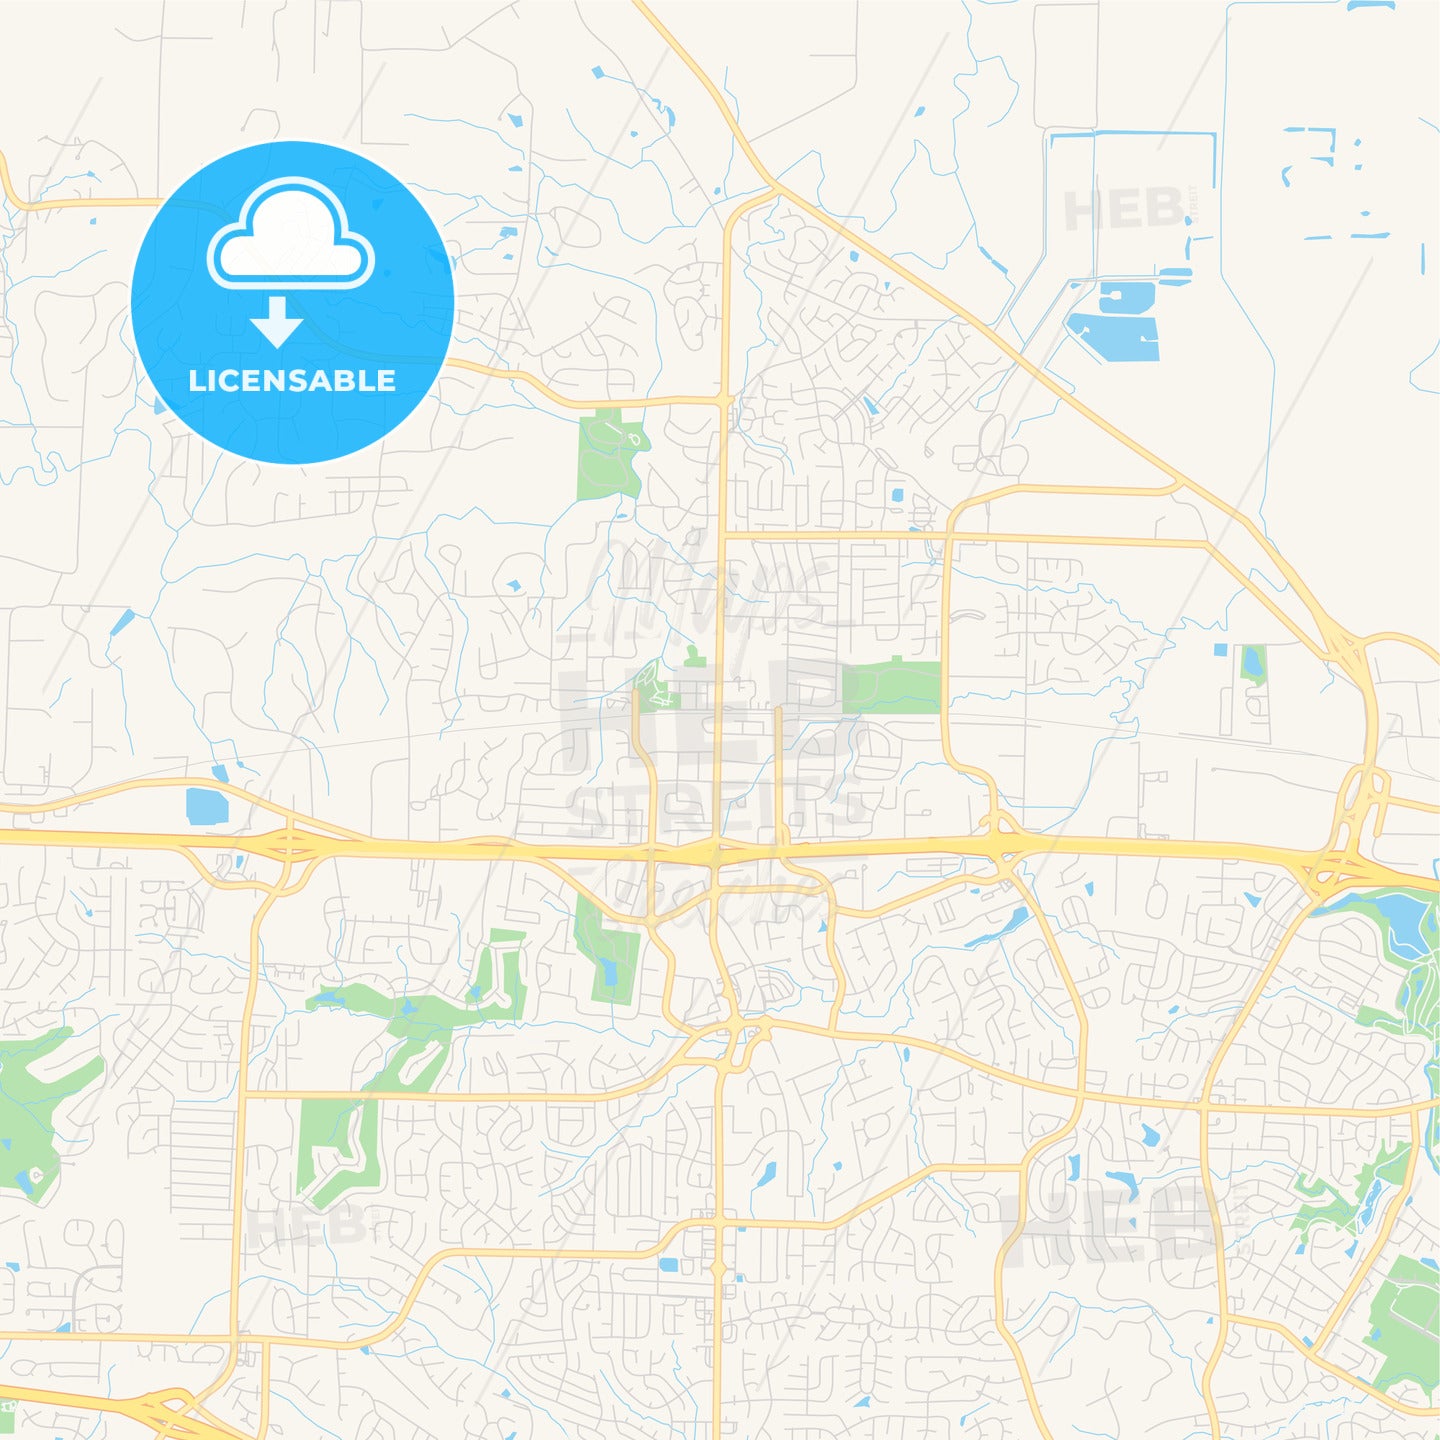 Empty vector map of O Fallon, Missouri, USA